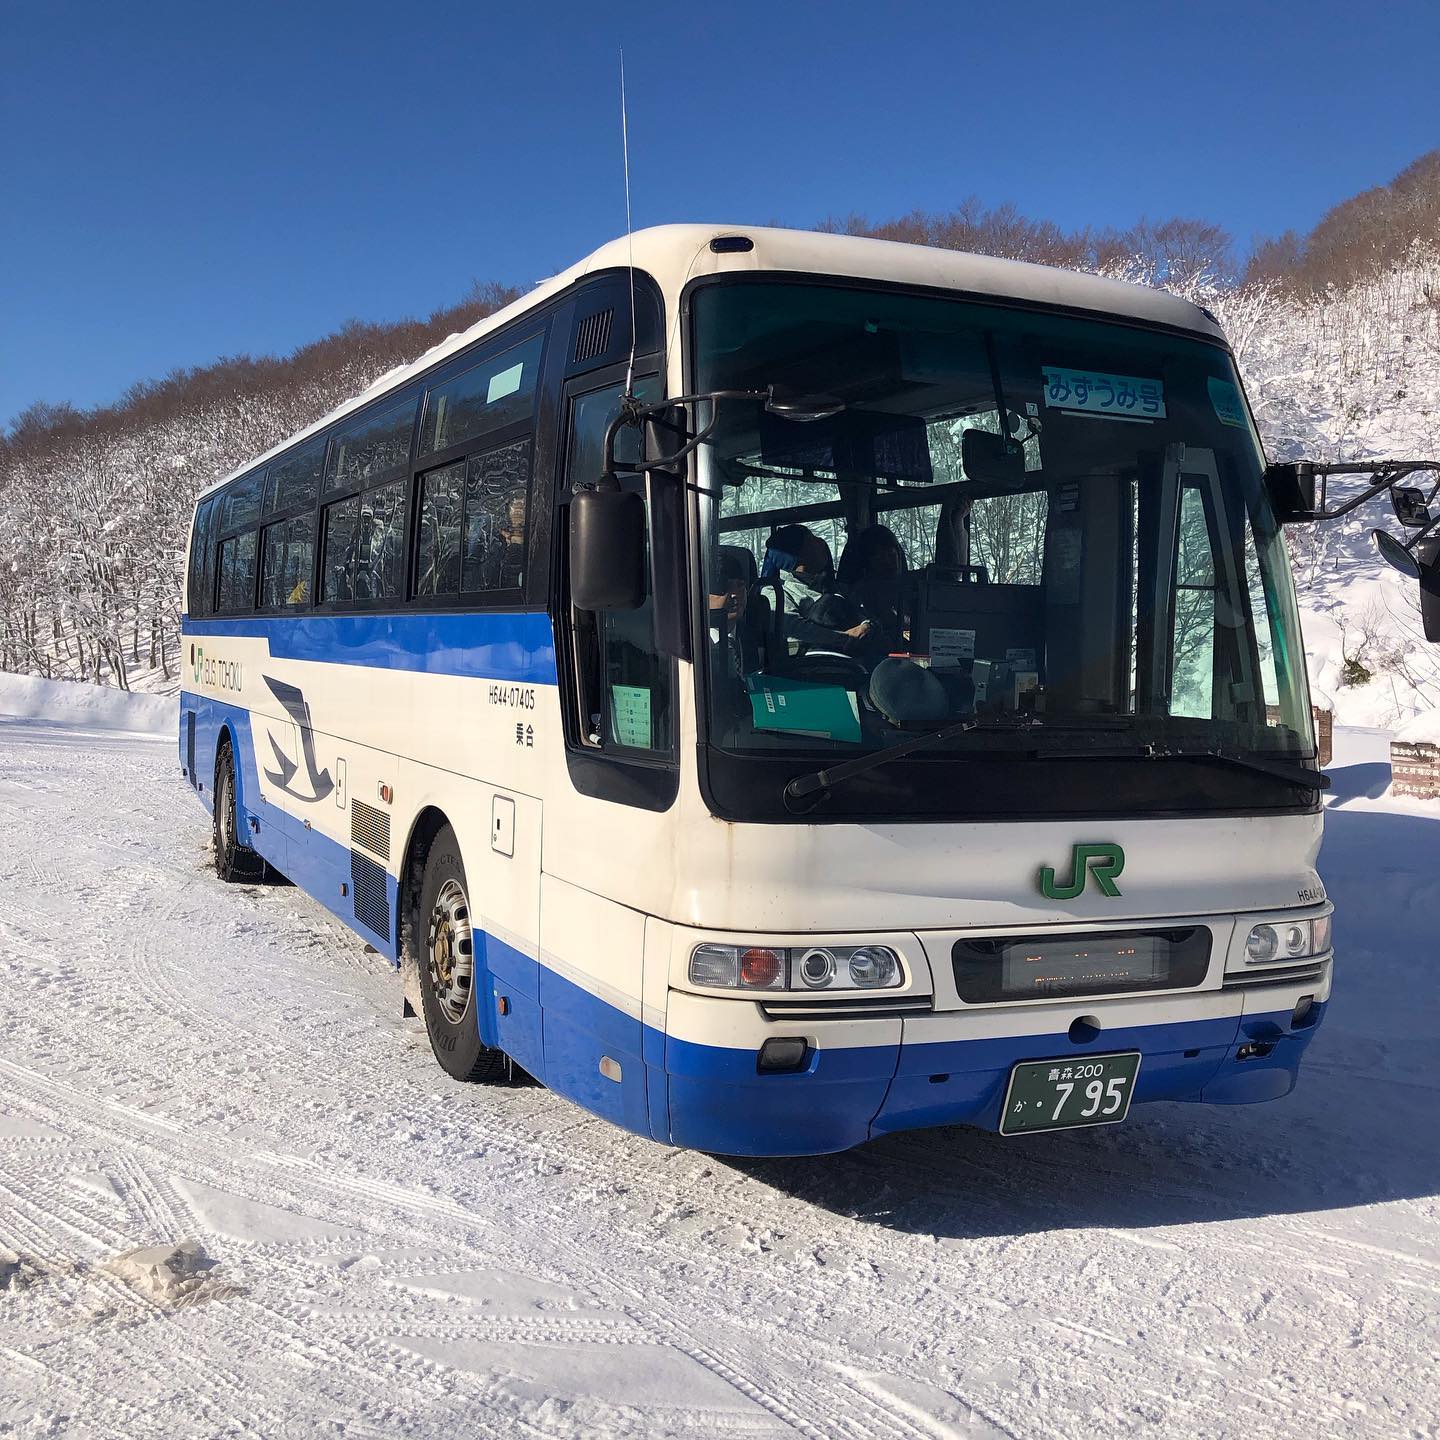 Ultimate Japan Transport Guide - Japan bus in snow